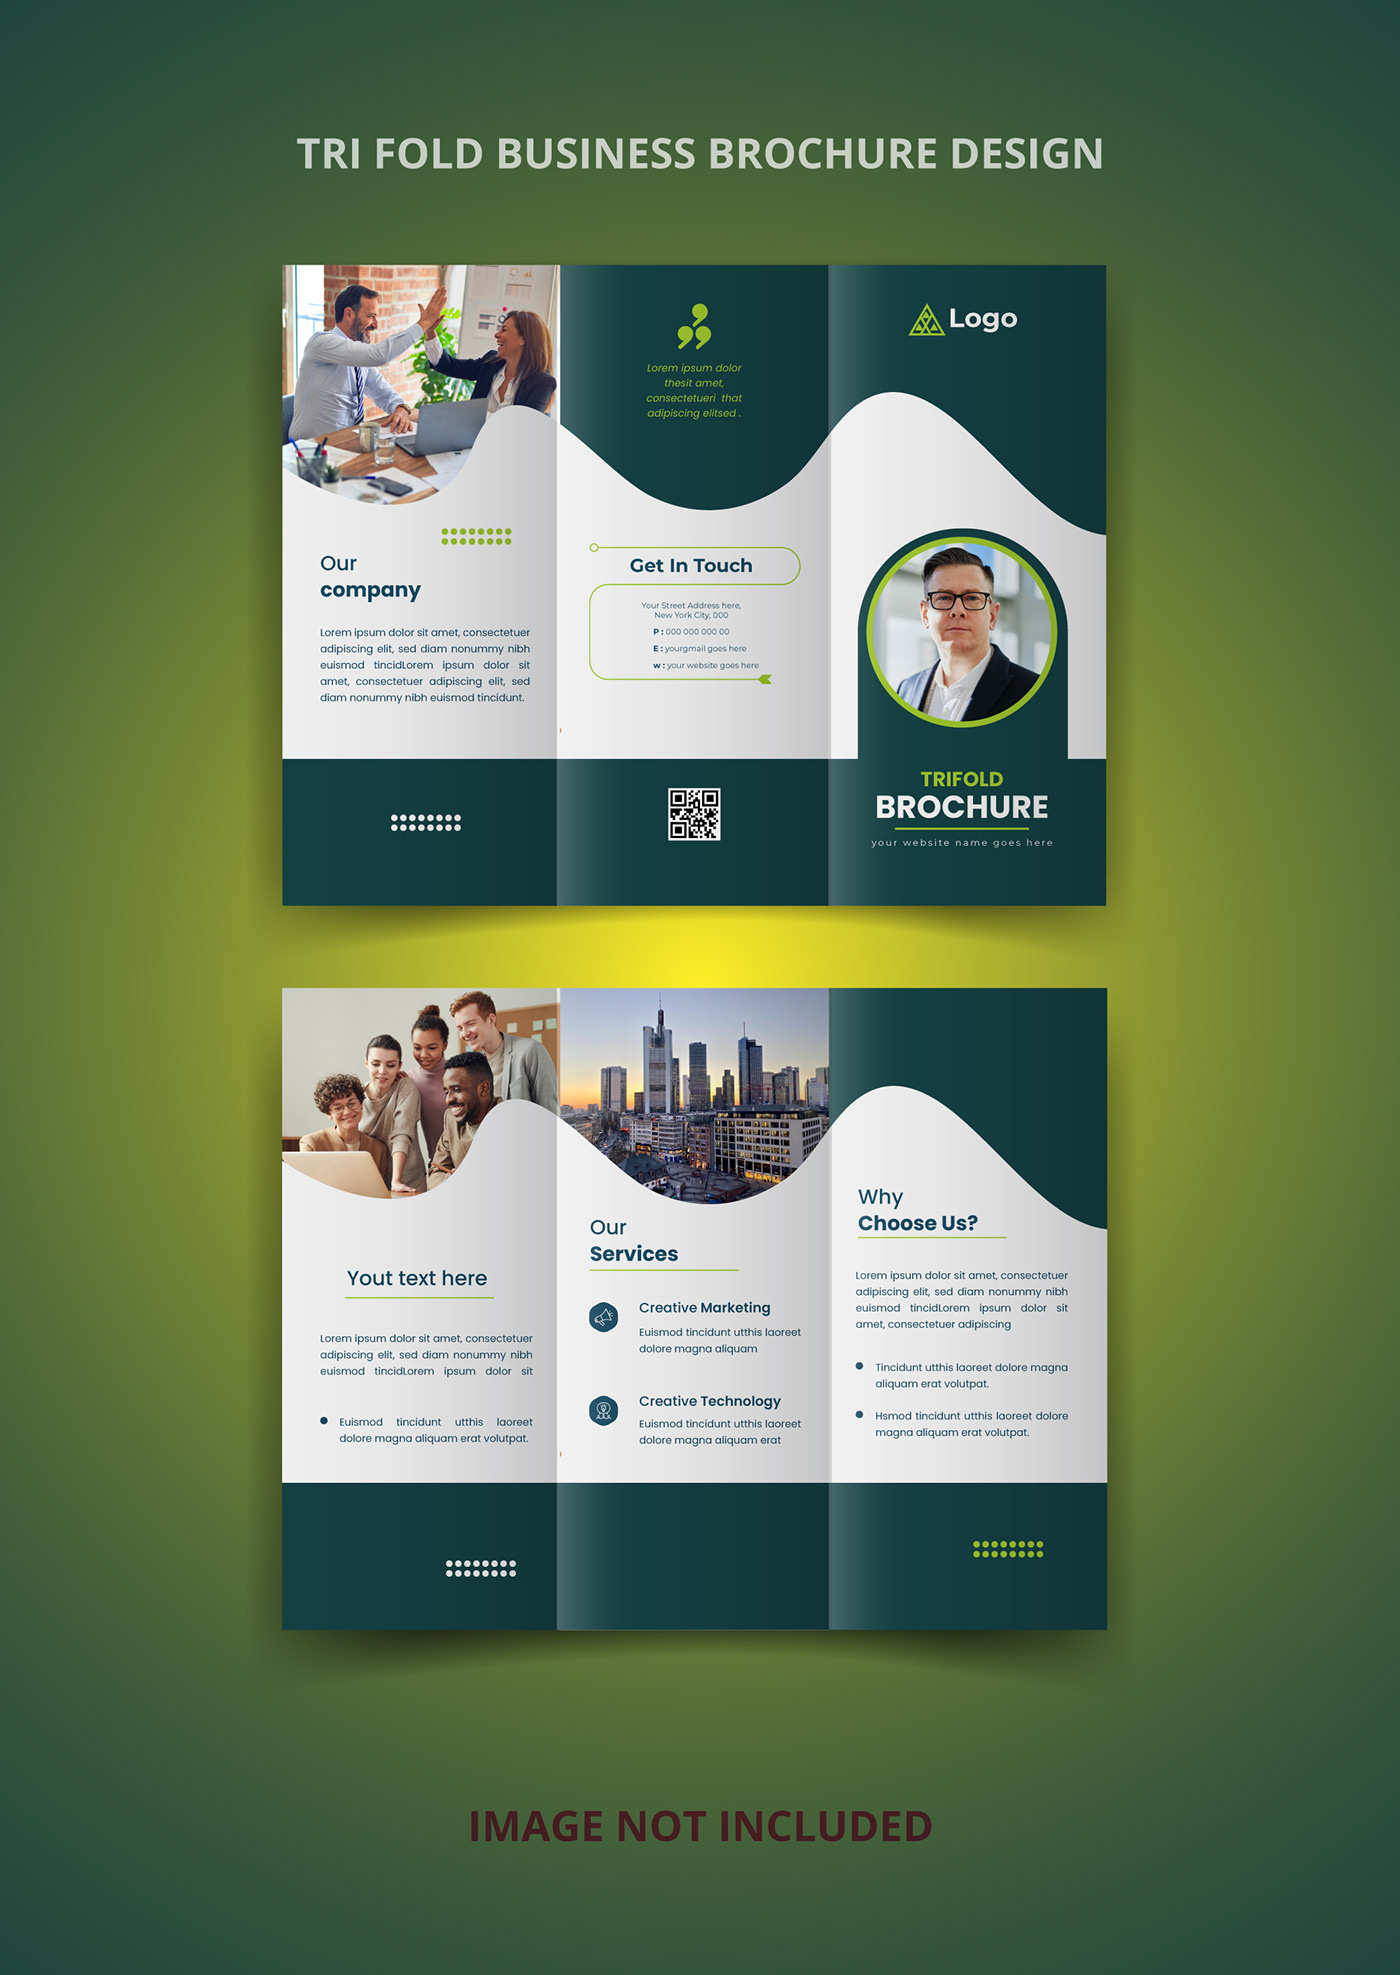 Trifold business brochure design 